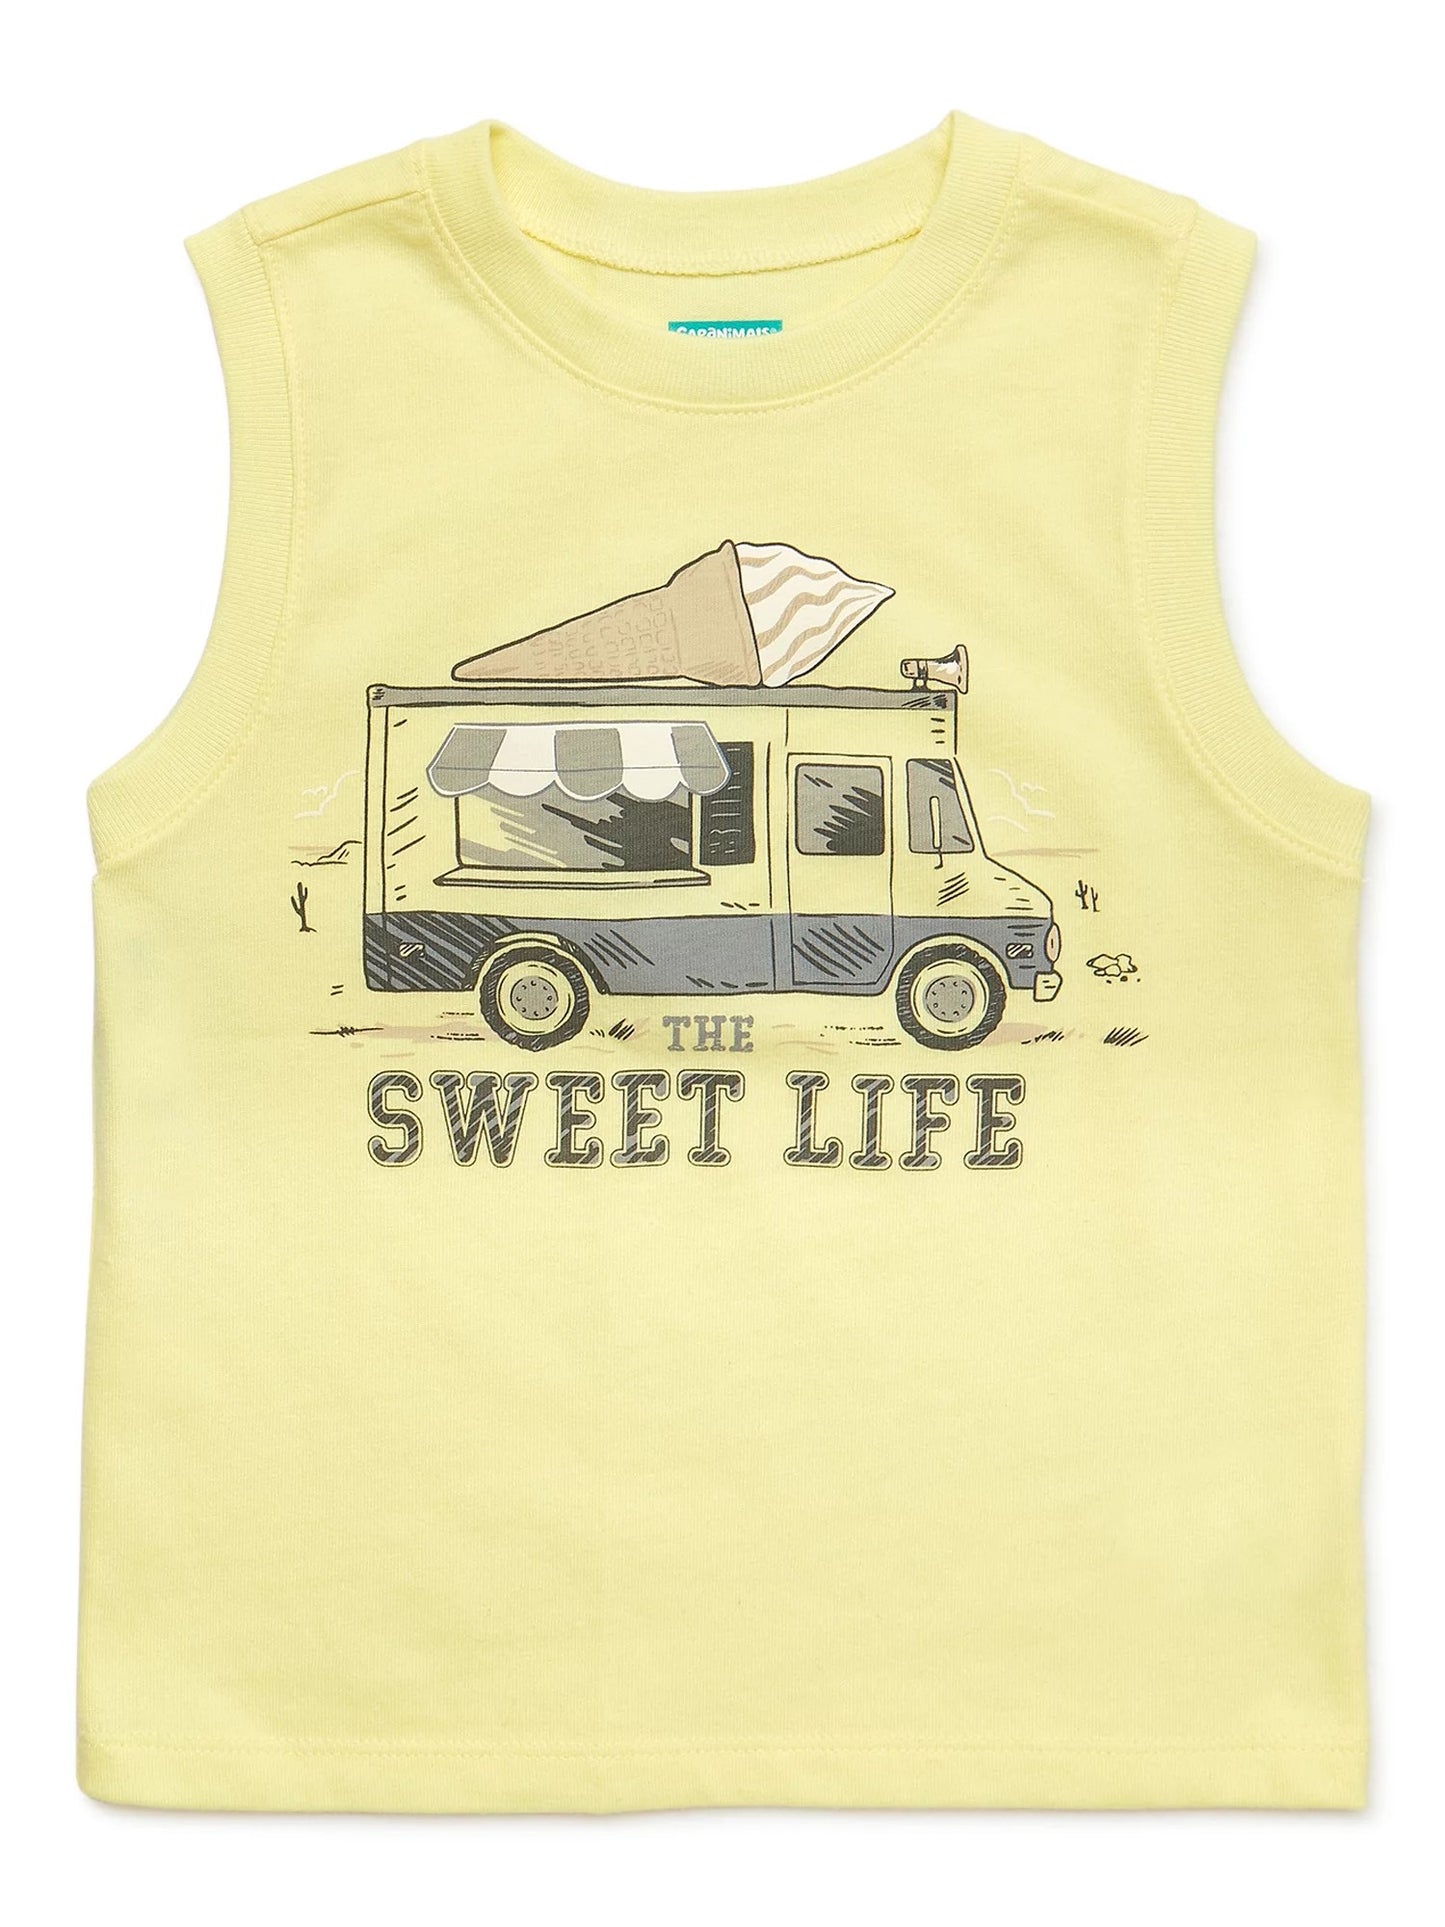 The Sweet Life Shirt